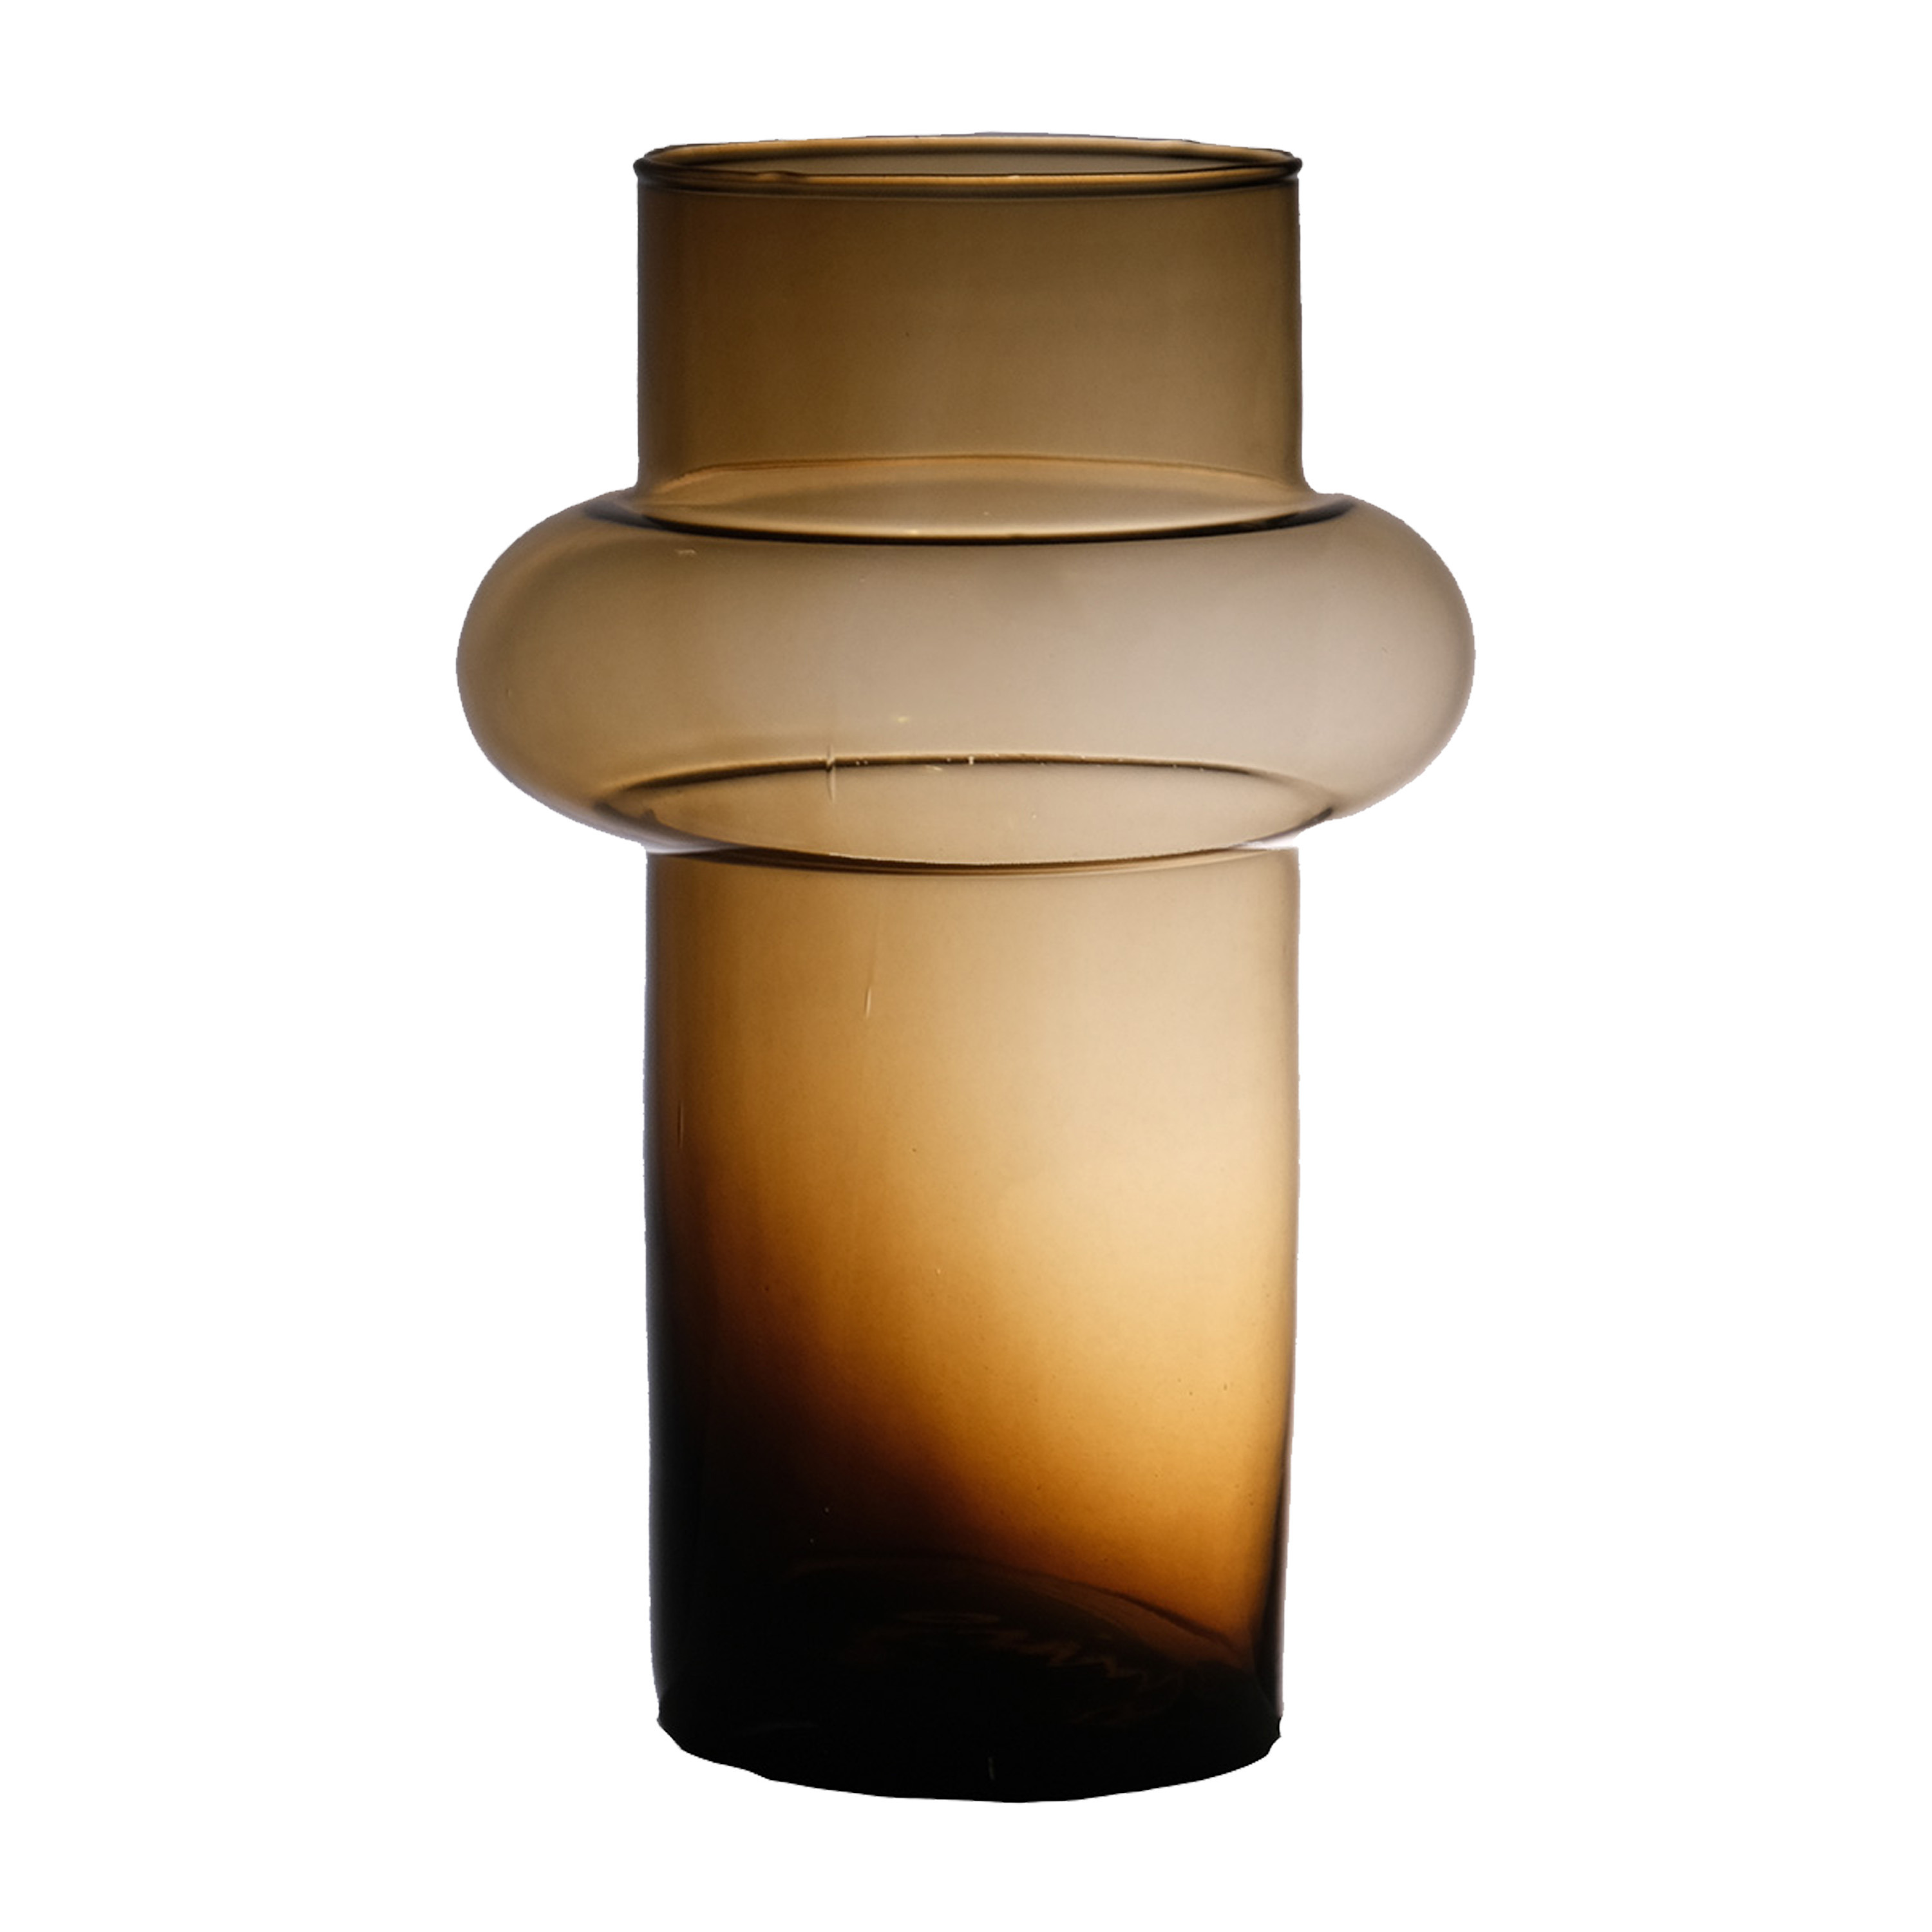 Hakbijl Glass Bloemenvaas Luna transparant amber eco glas D19 x H30 cm cilinder vaas